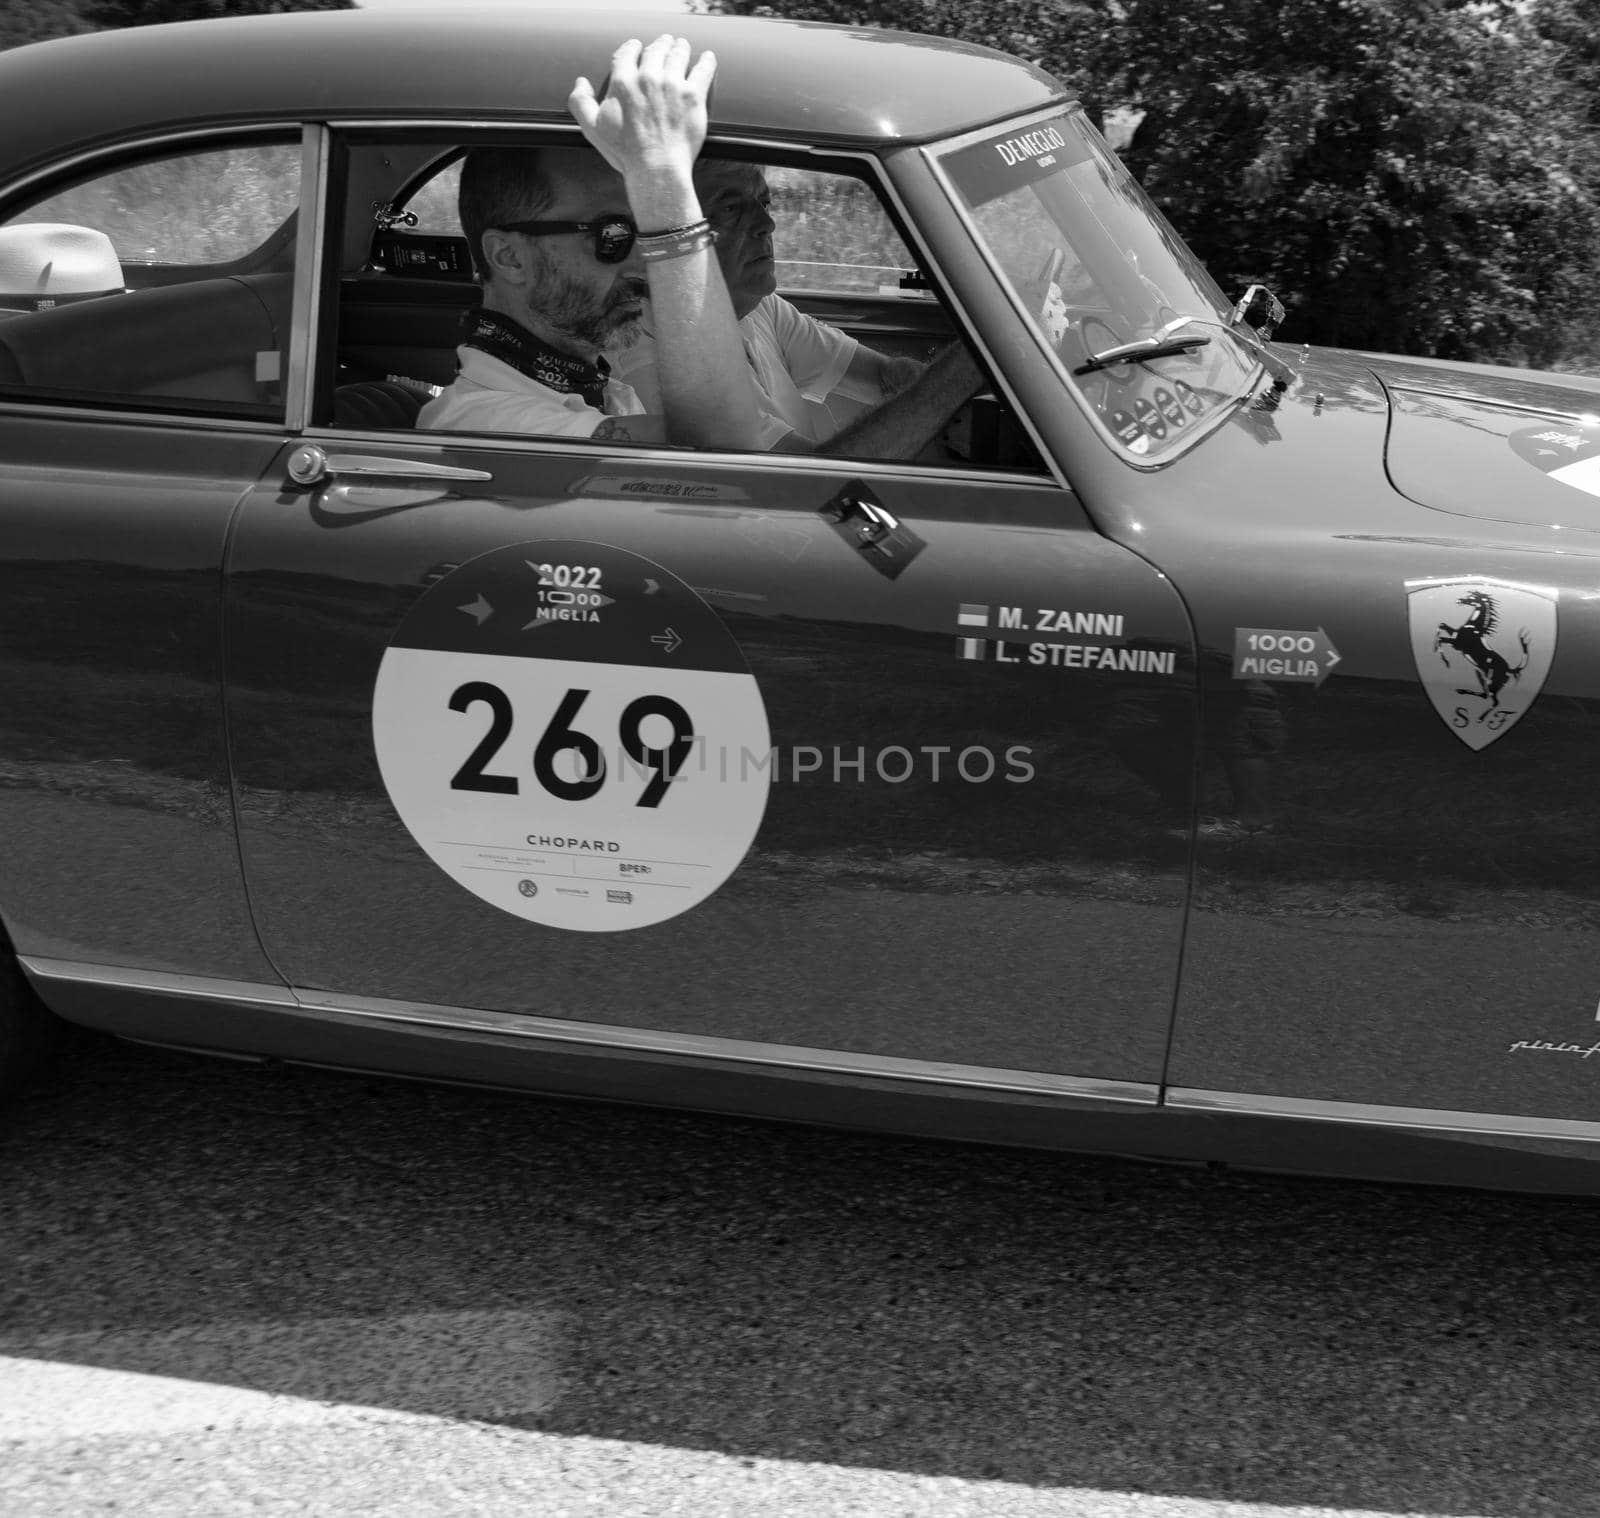 FERRARI 212 INTER EUROPA PINIFARINA 1953 on an old racing car in rally Mille Miglia 2022 the famous italian historical race (1927-1957 by massimocampanari